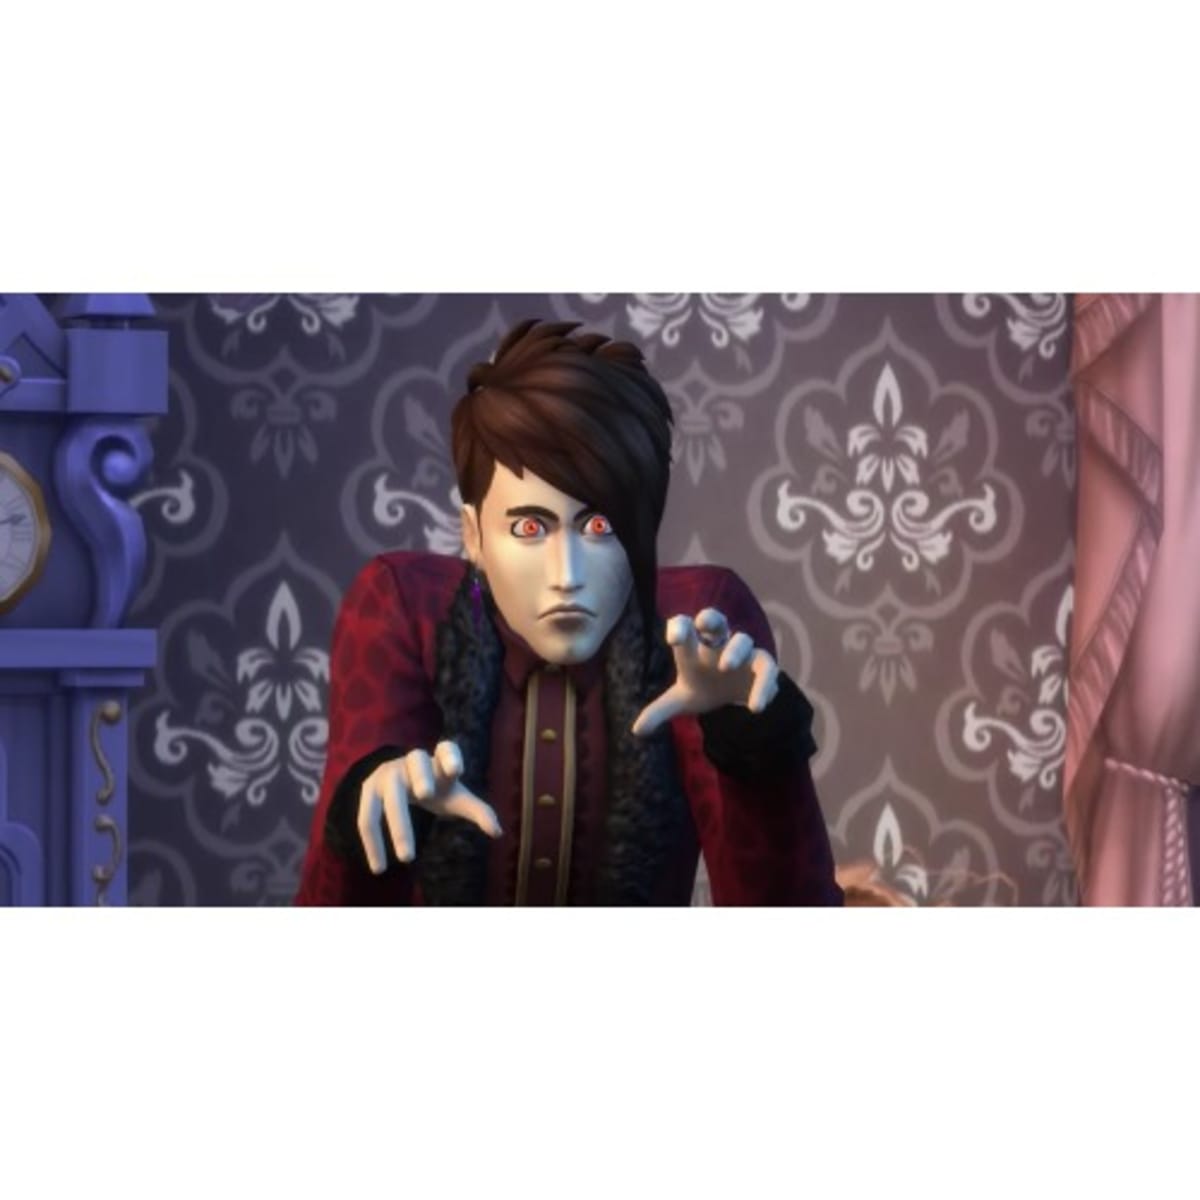 The Sims 4 - Vampires - Origin PC [Online Game Code] - Yahoo Shopping